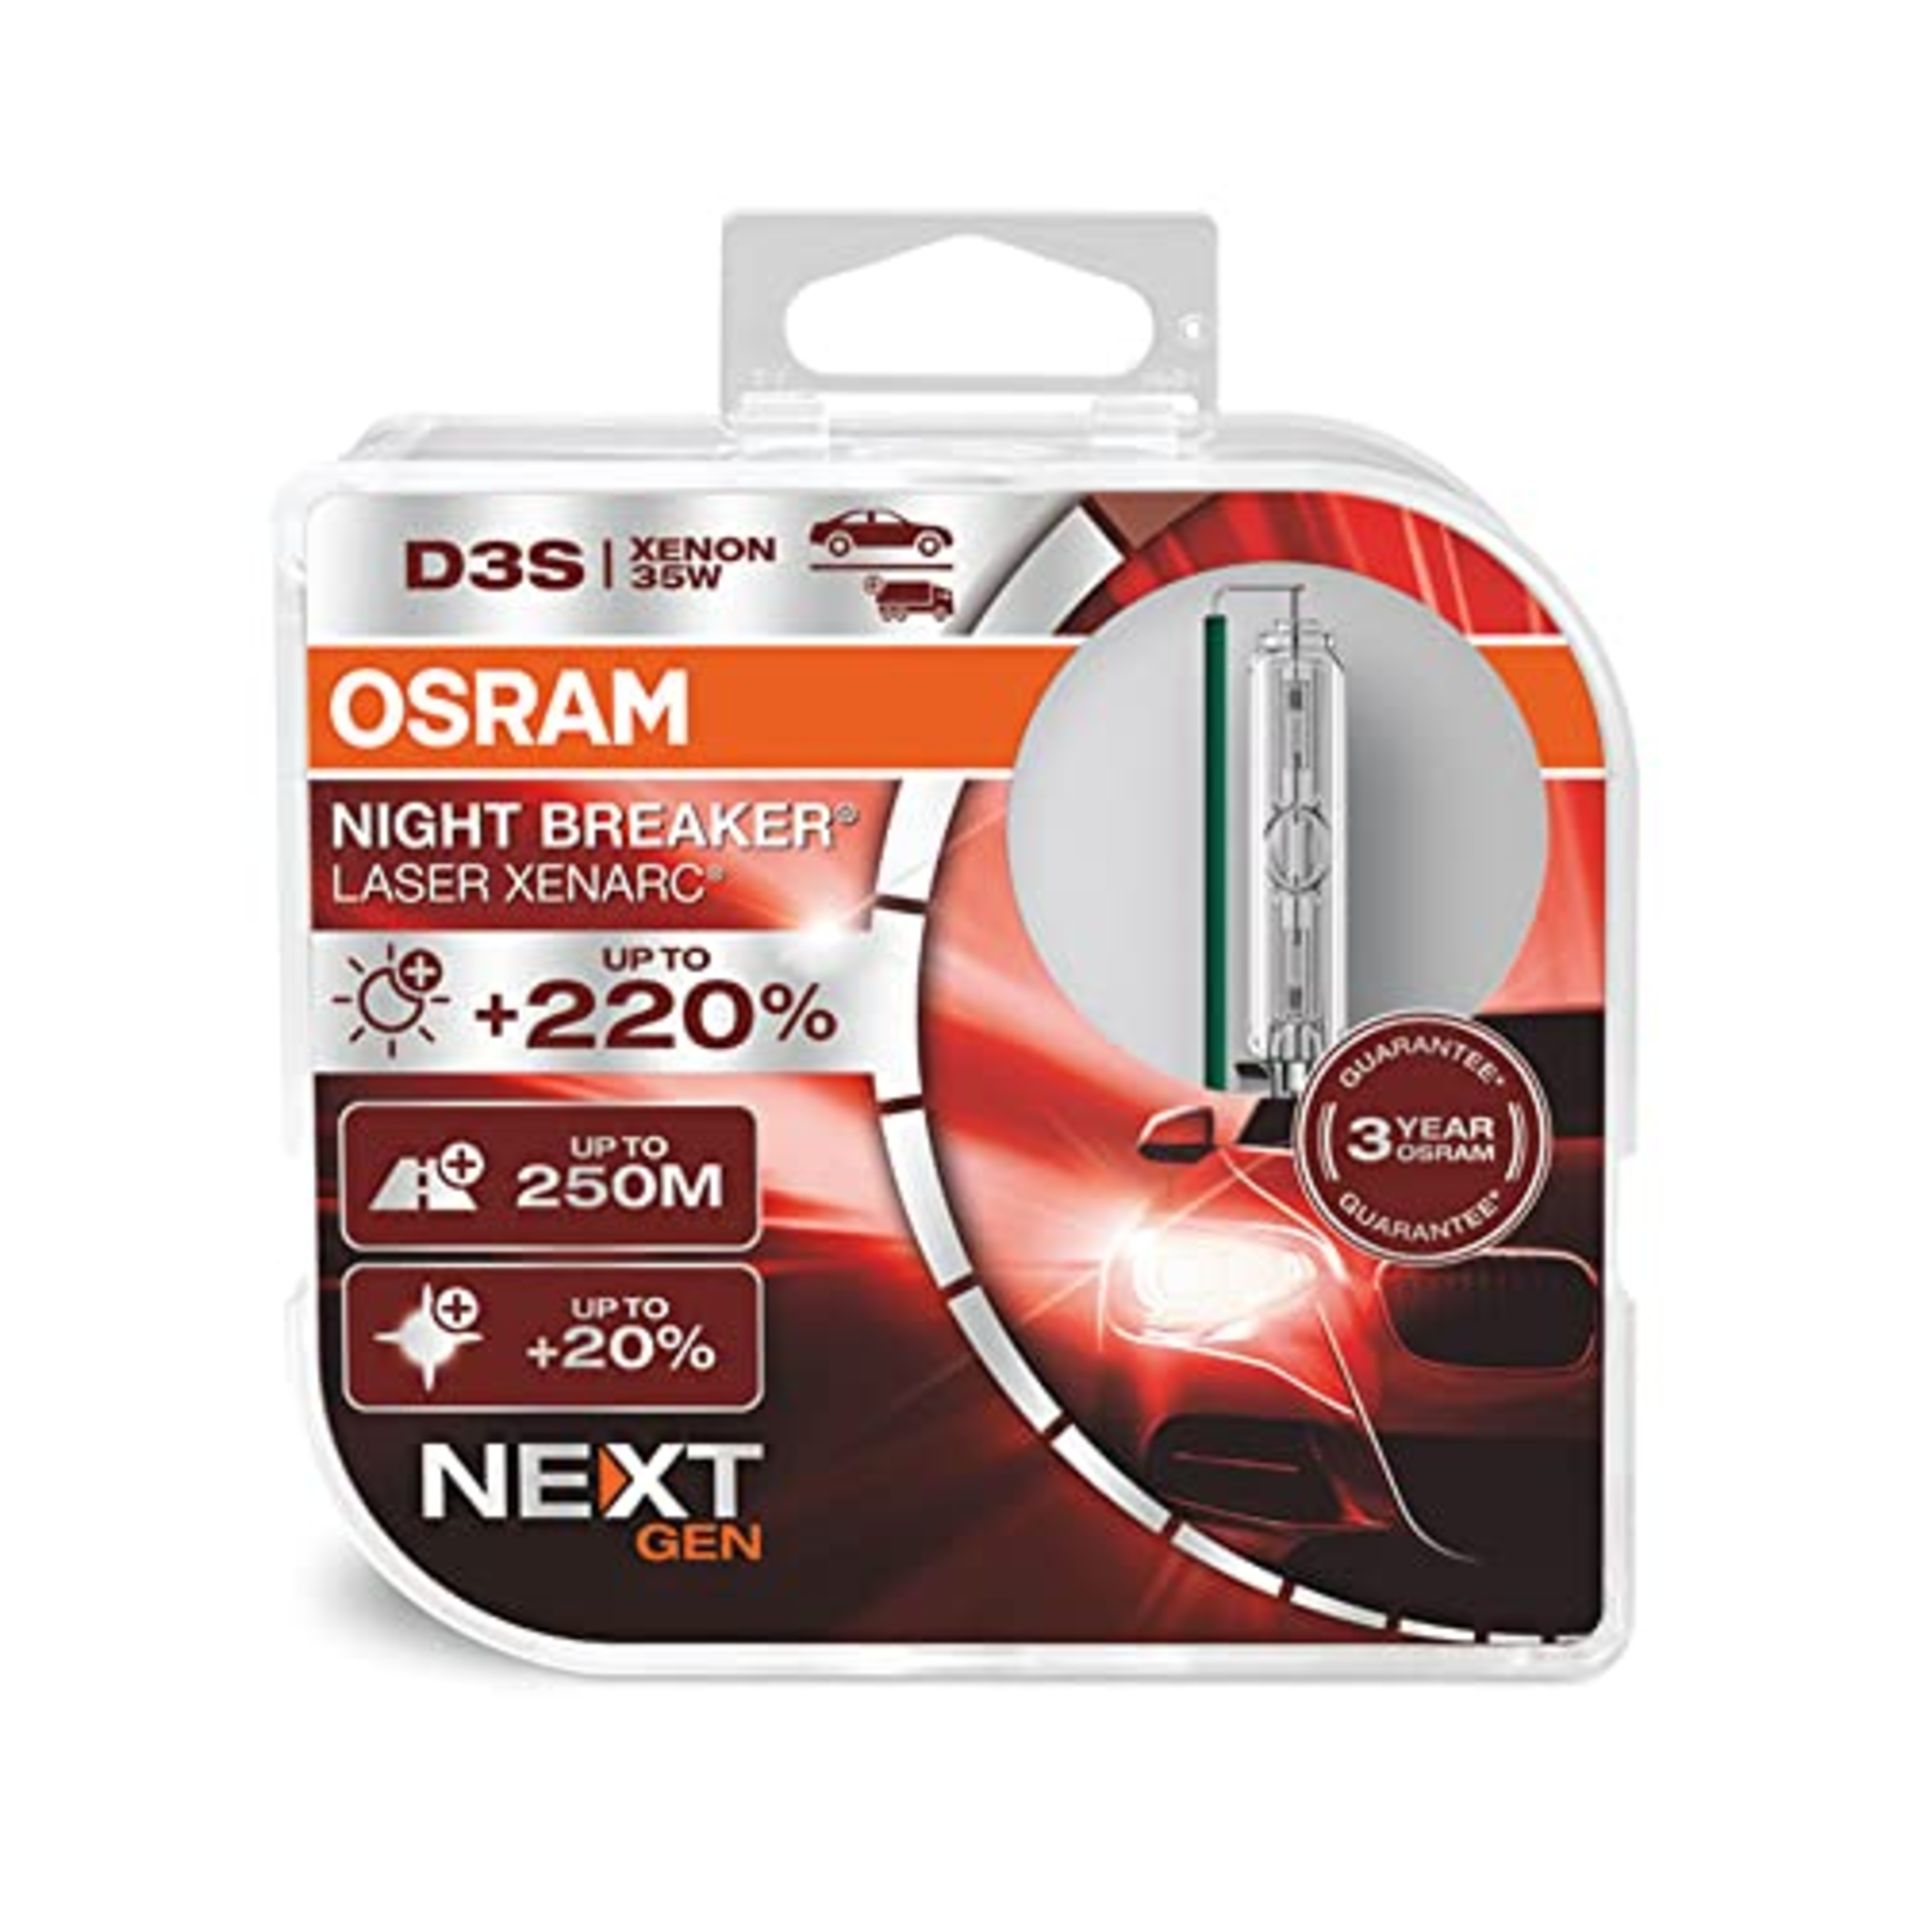 RRP £144.00 OSRAM XENARC NIGHT BREAKER LASER D3S, Next Generation, 220% more brightness, HID xenon